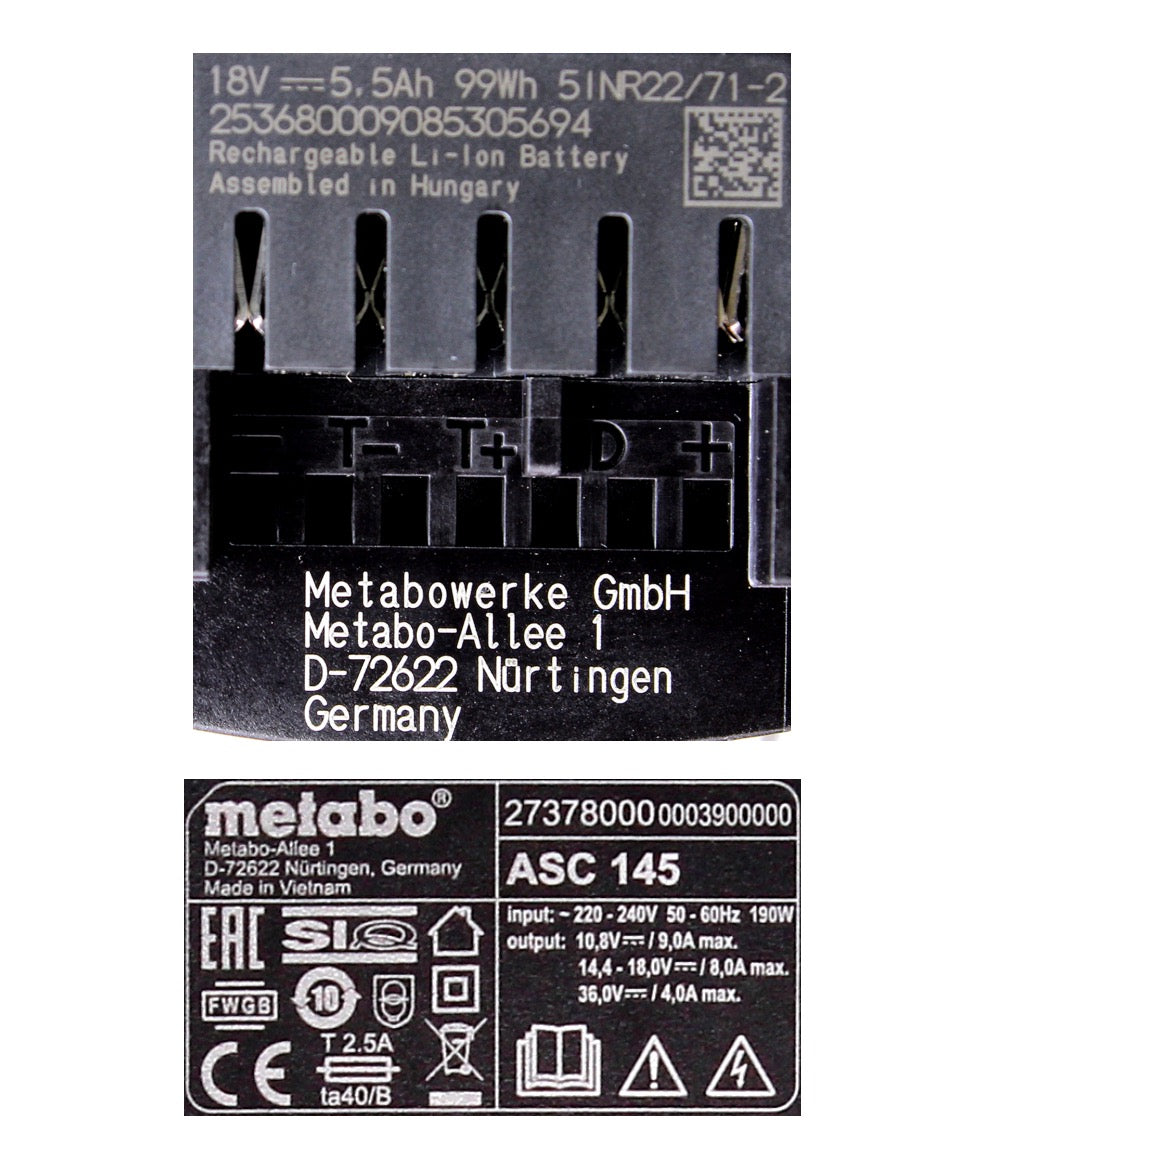 Metabo Akku Basis Set 18V mit 1x Akku LiHD 5,5Ah ( 625368000 ) + Ladegerät ASC 145 ( 627378000 ) - Toolbrothers